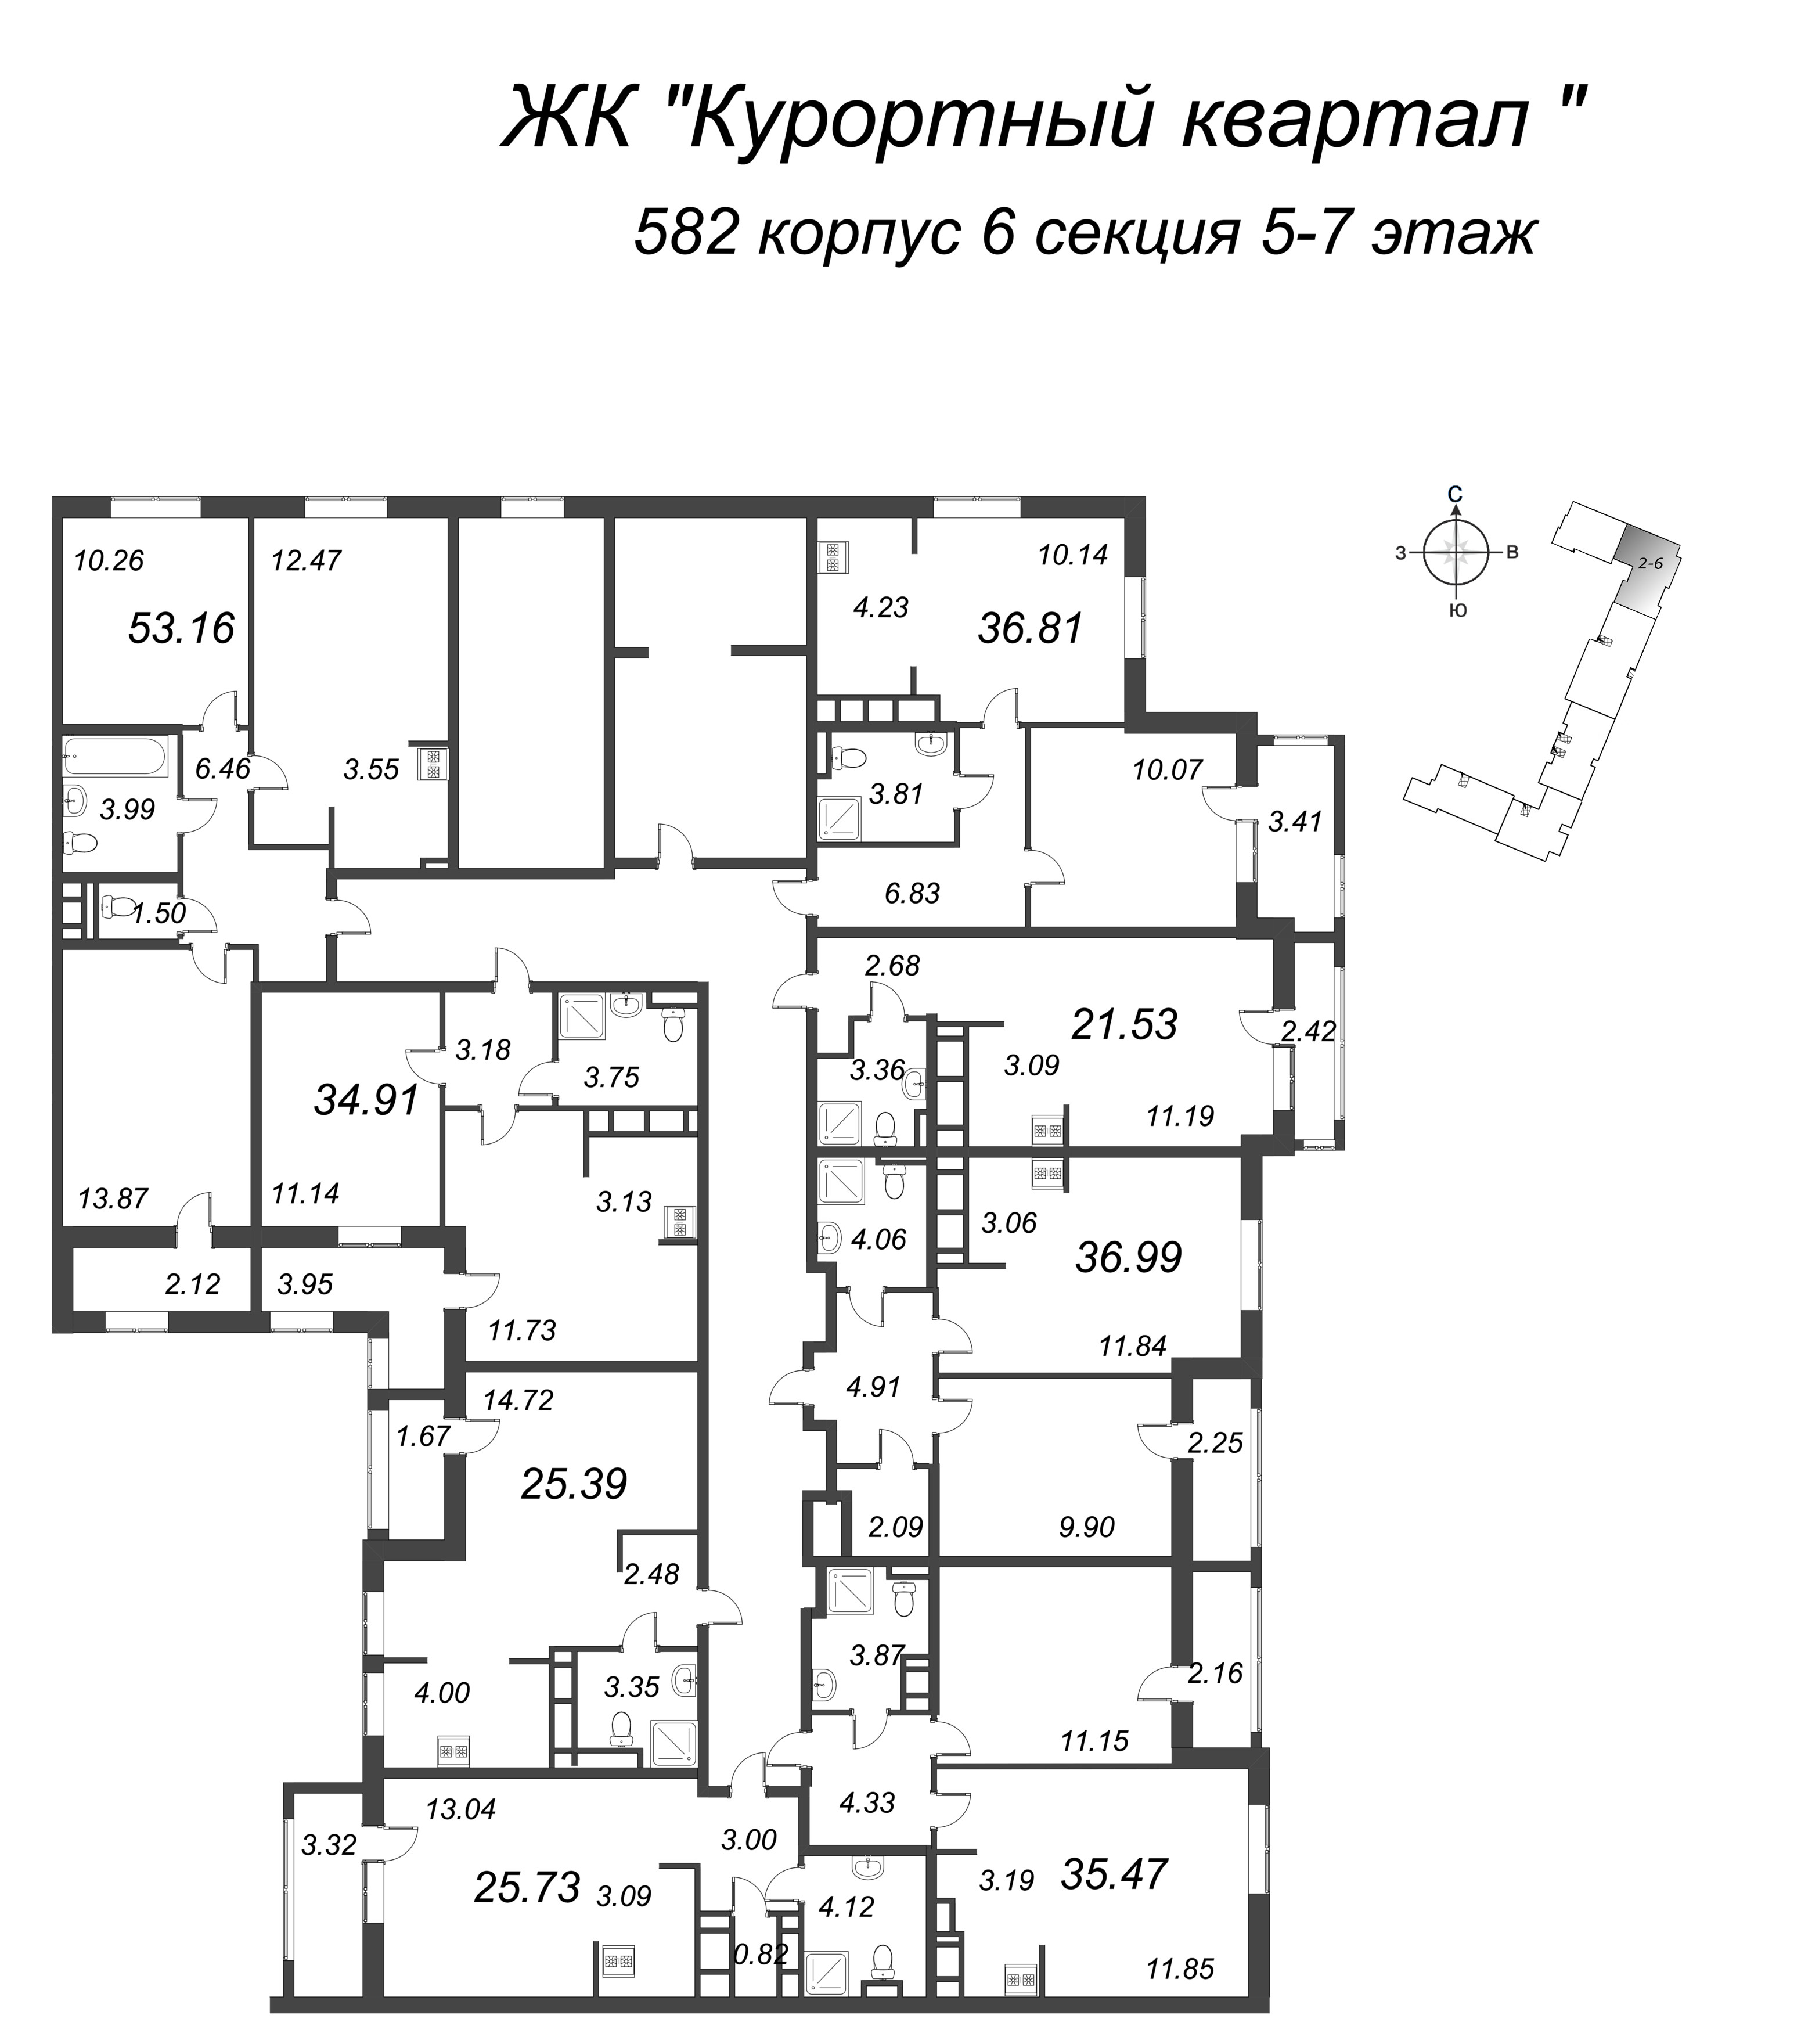 3-комнатная (Евро) квартира, 53.16 м² - планировка этажа